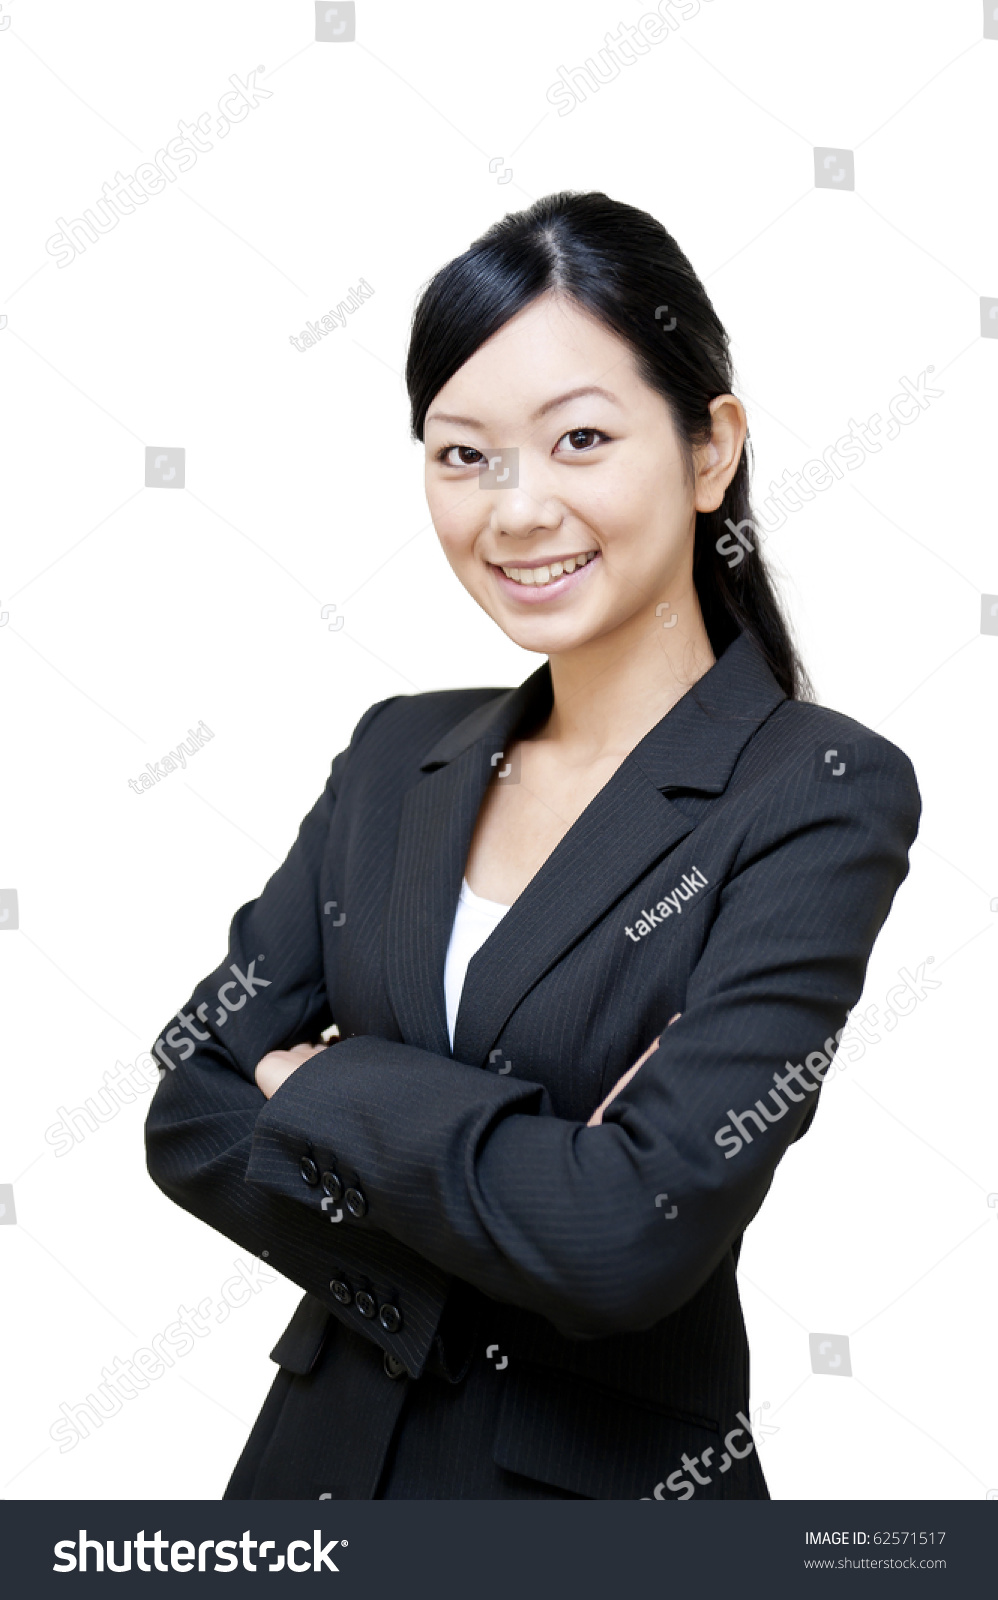 stock-photo-portrait-of-japanese-business-woman-62571517.jpg